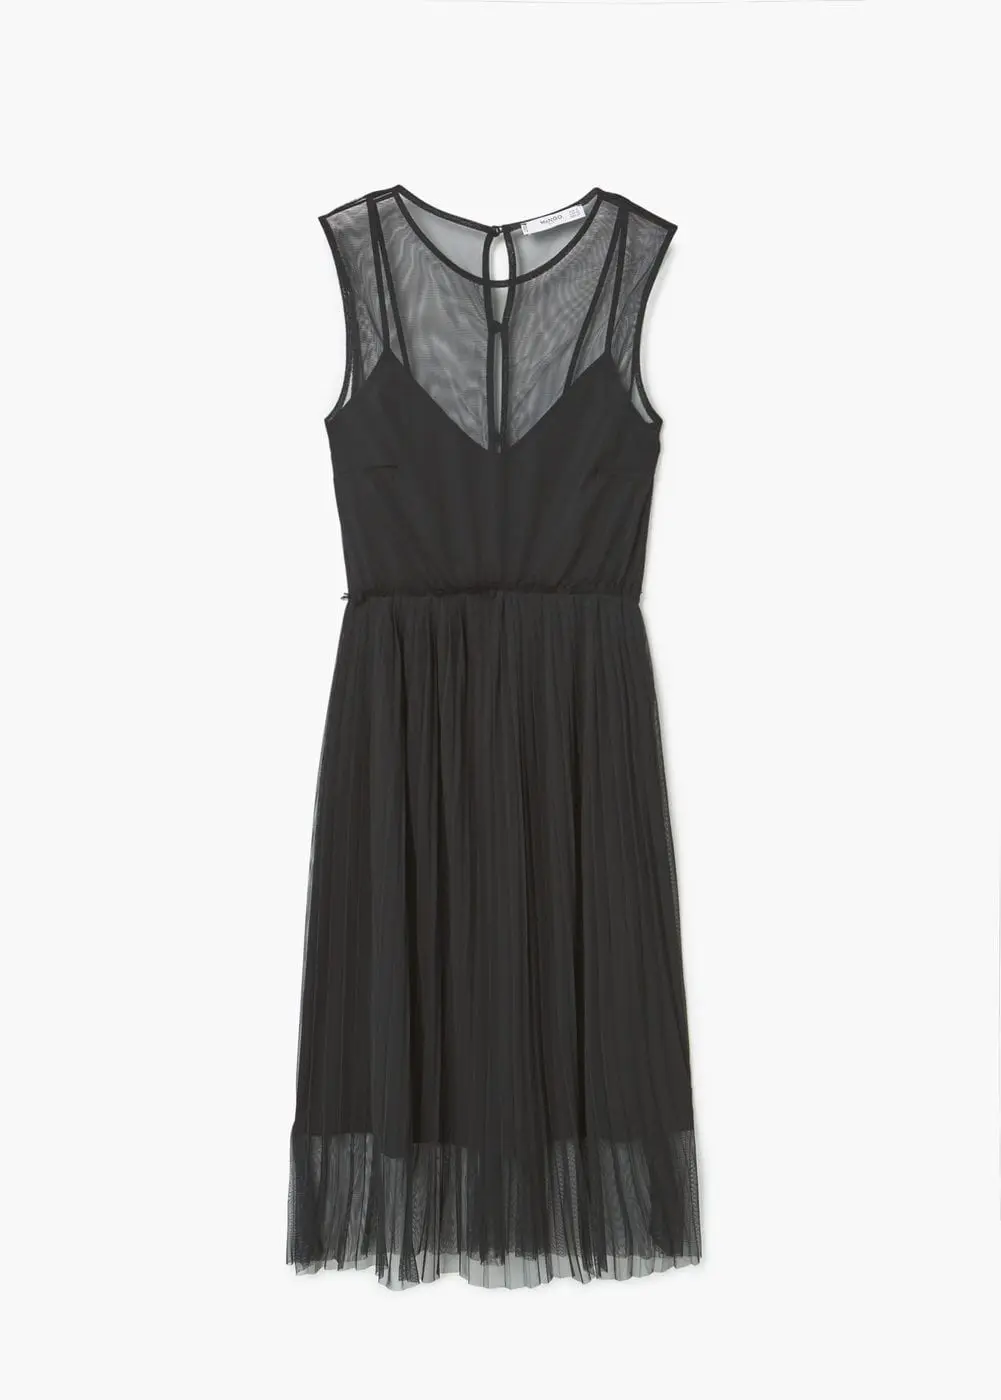 Tulle skirt dress, colour black, Rp. 399.000. (Image: shop.mango.com)